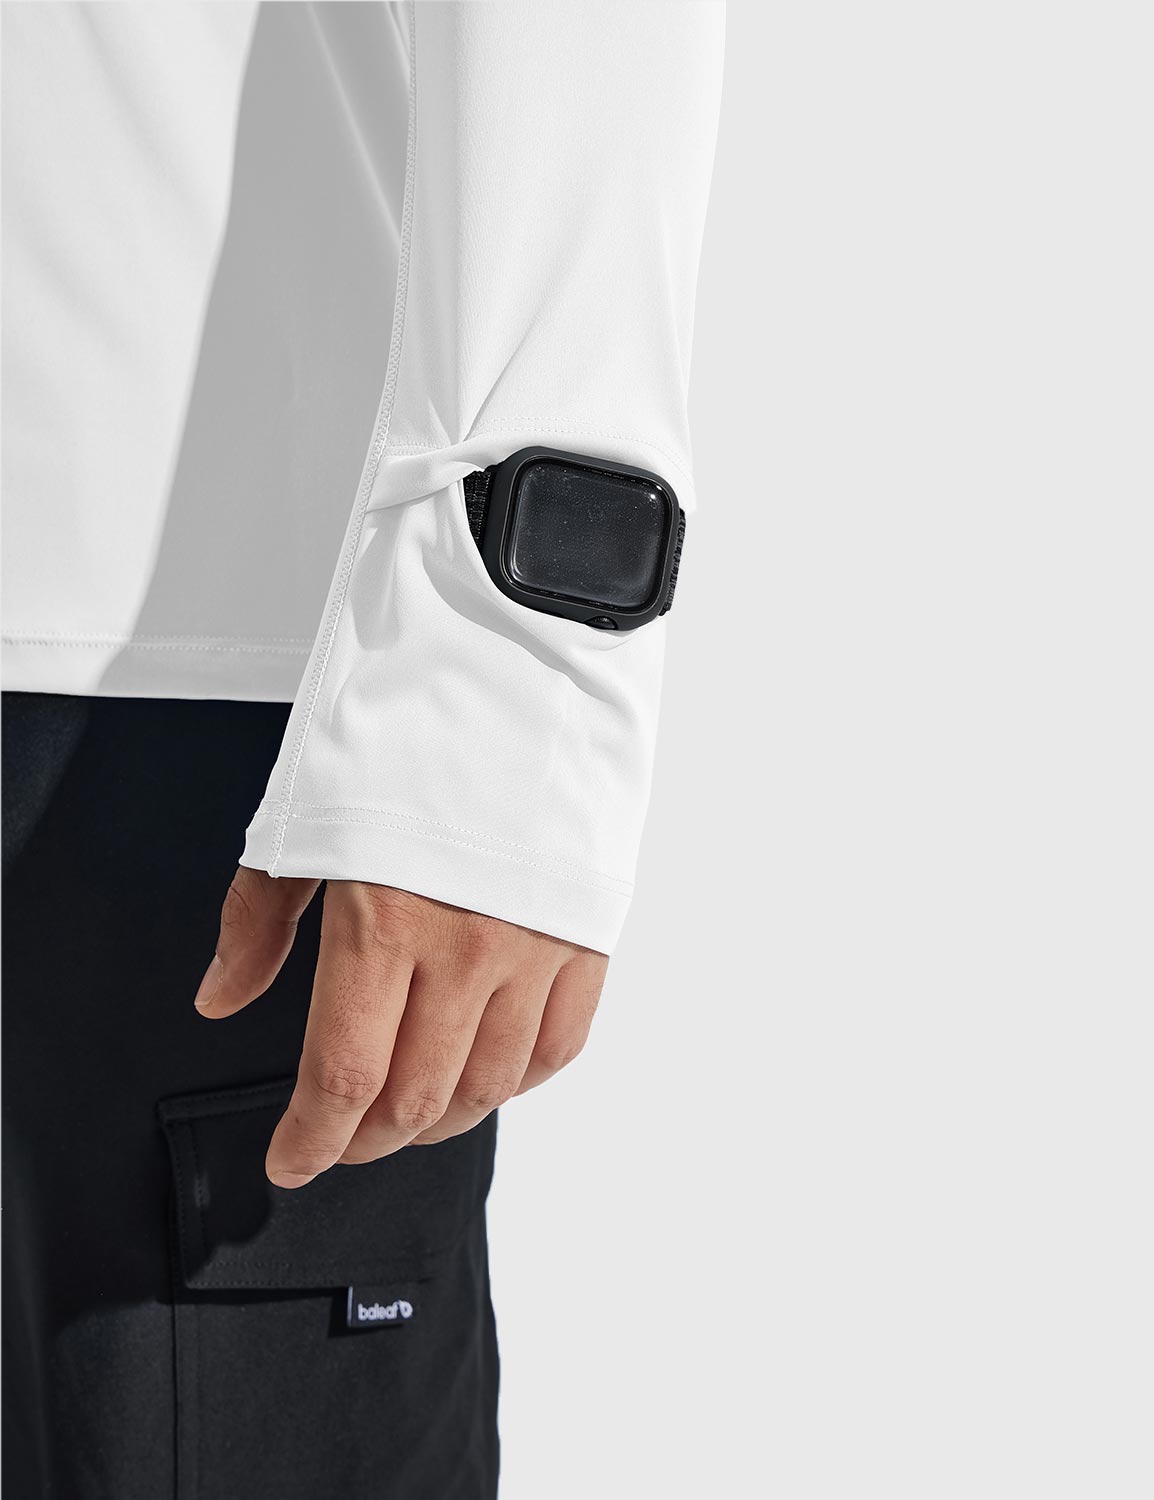 Baleaf Men‘s Quick-dry UPF 50+ Zipper Pocket Shirt Lucent White with Watch Windows